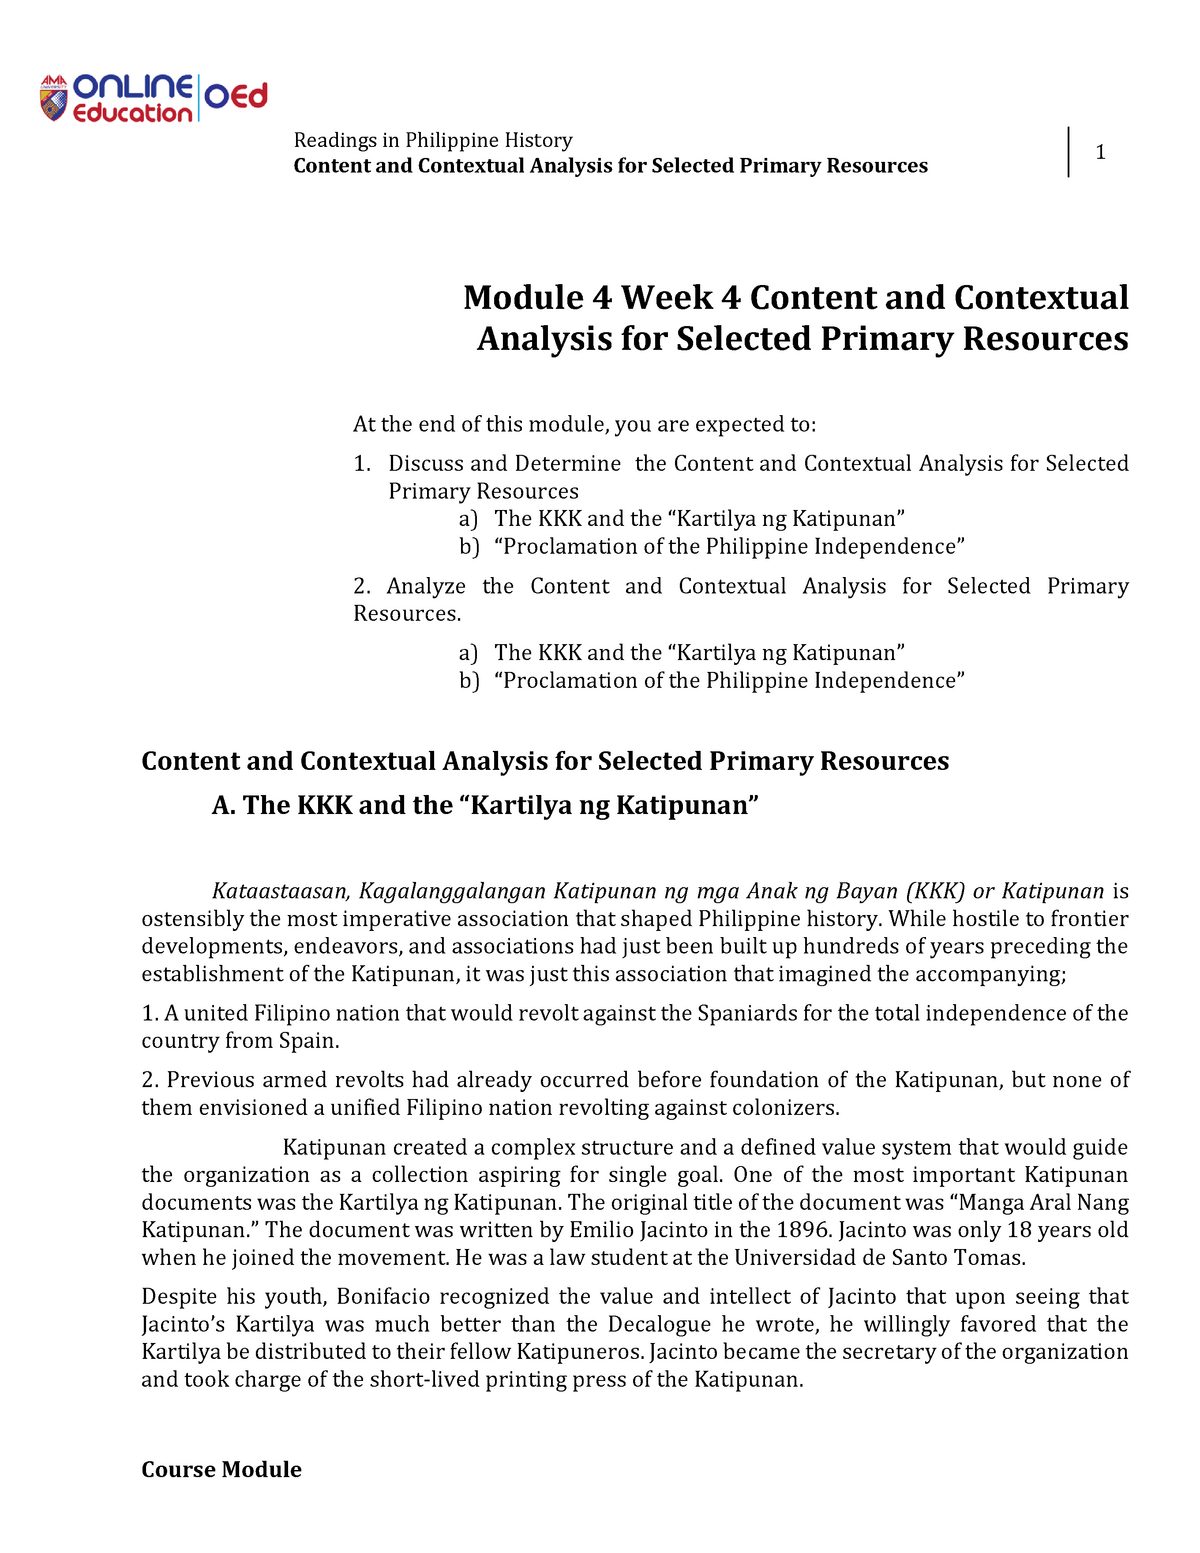 contextual analysis example essay pdf